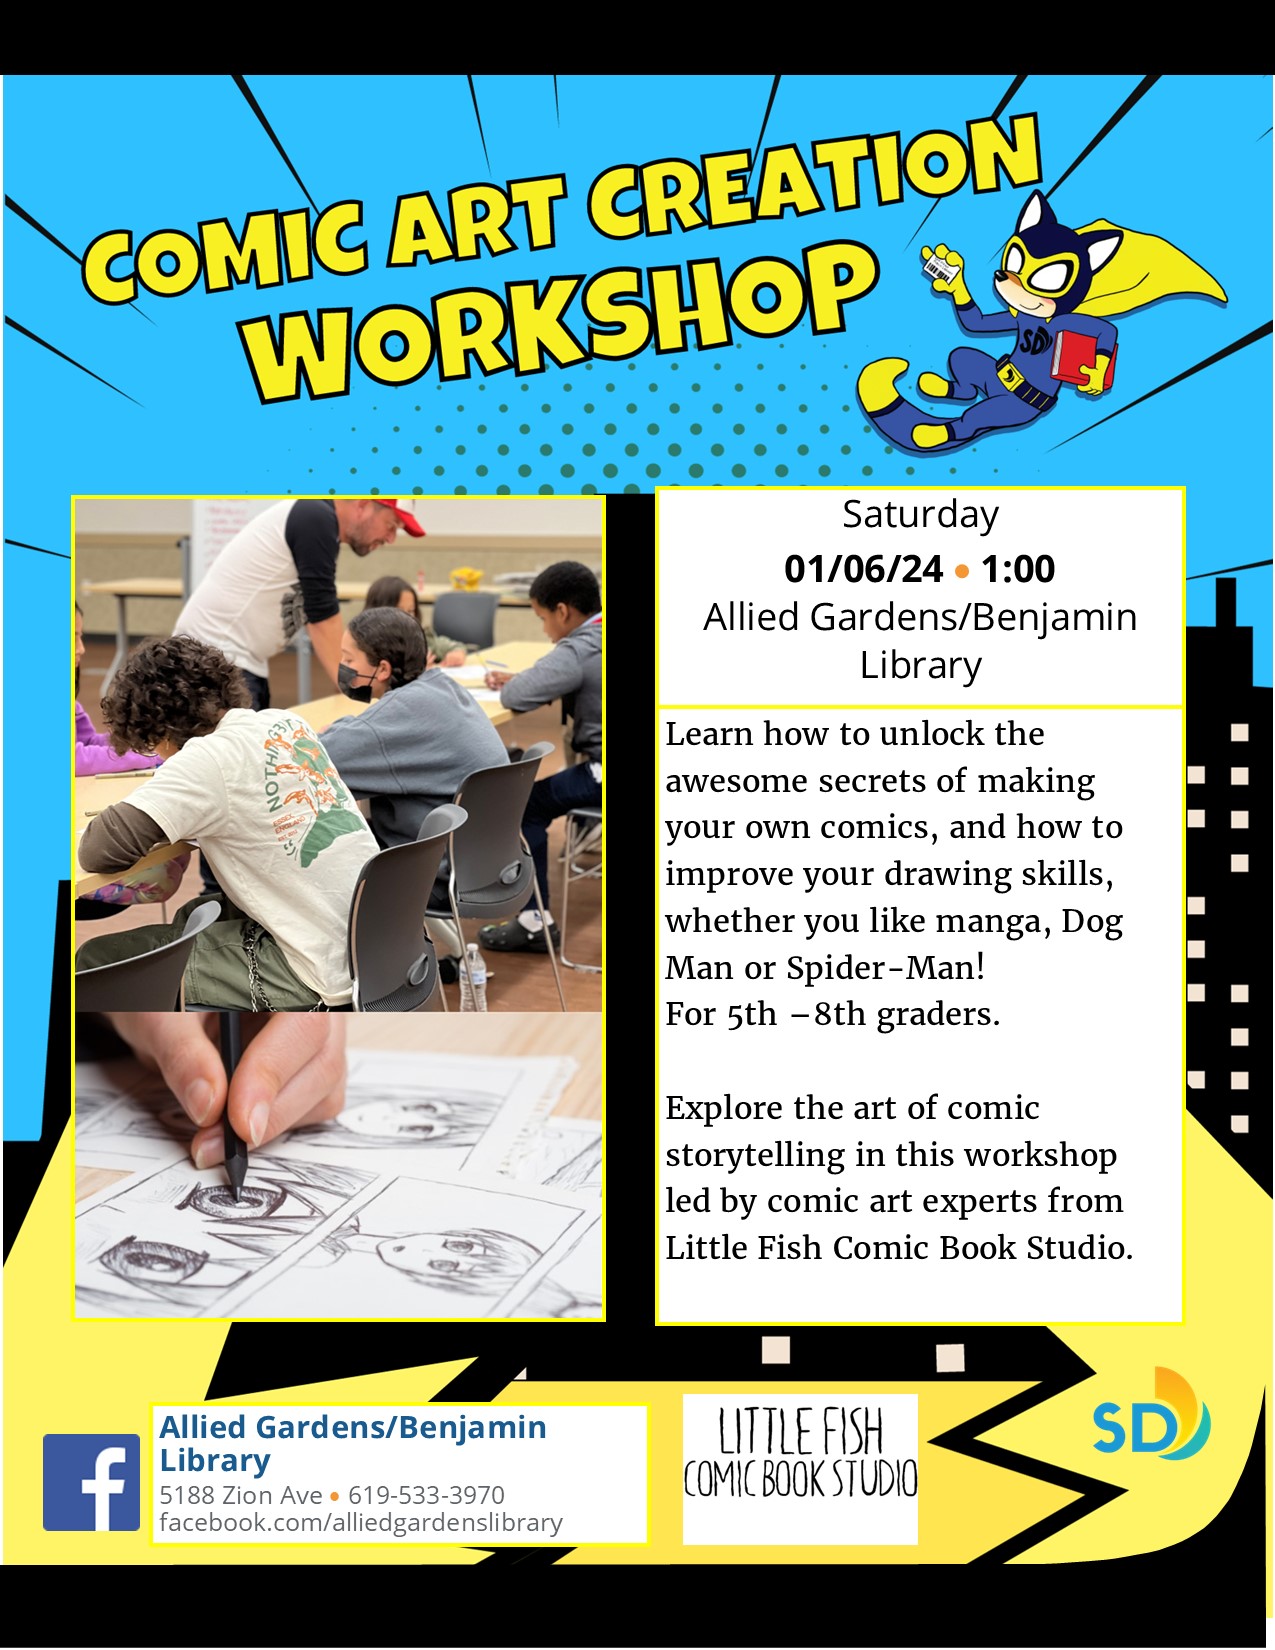 Comic art creation workshop